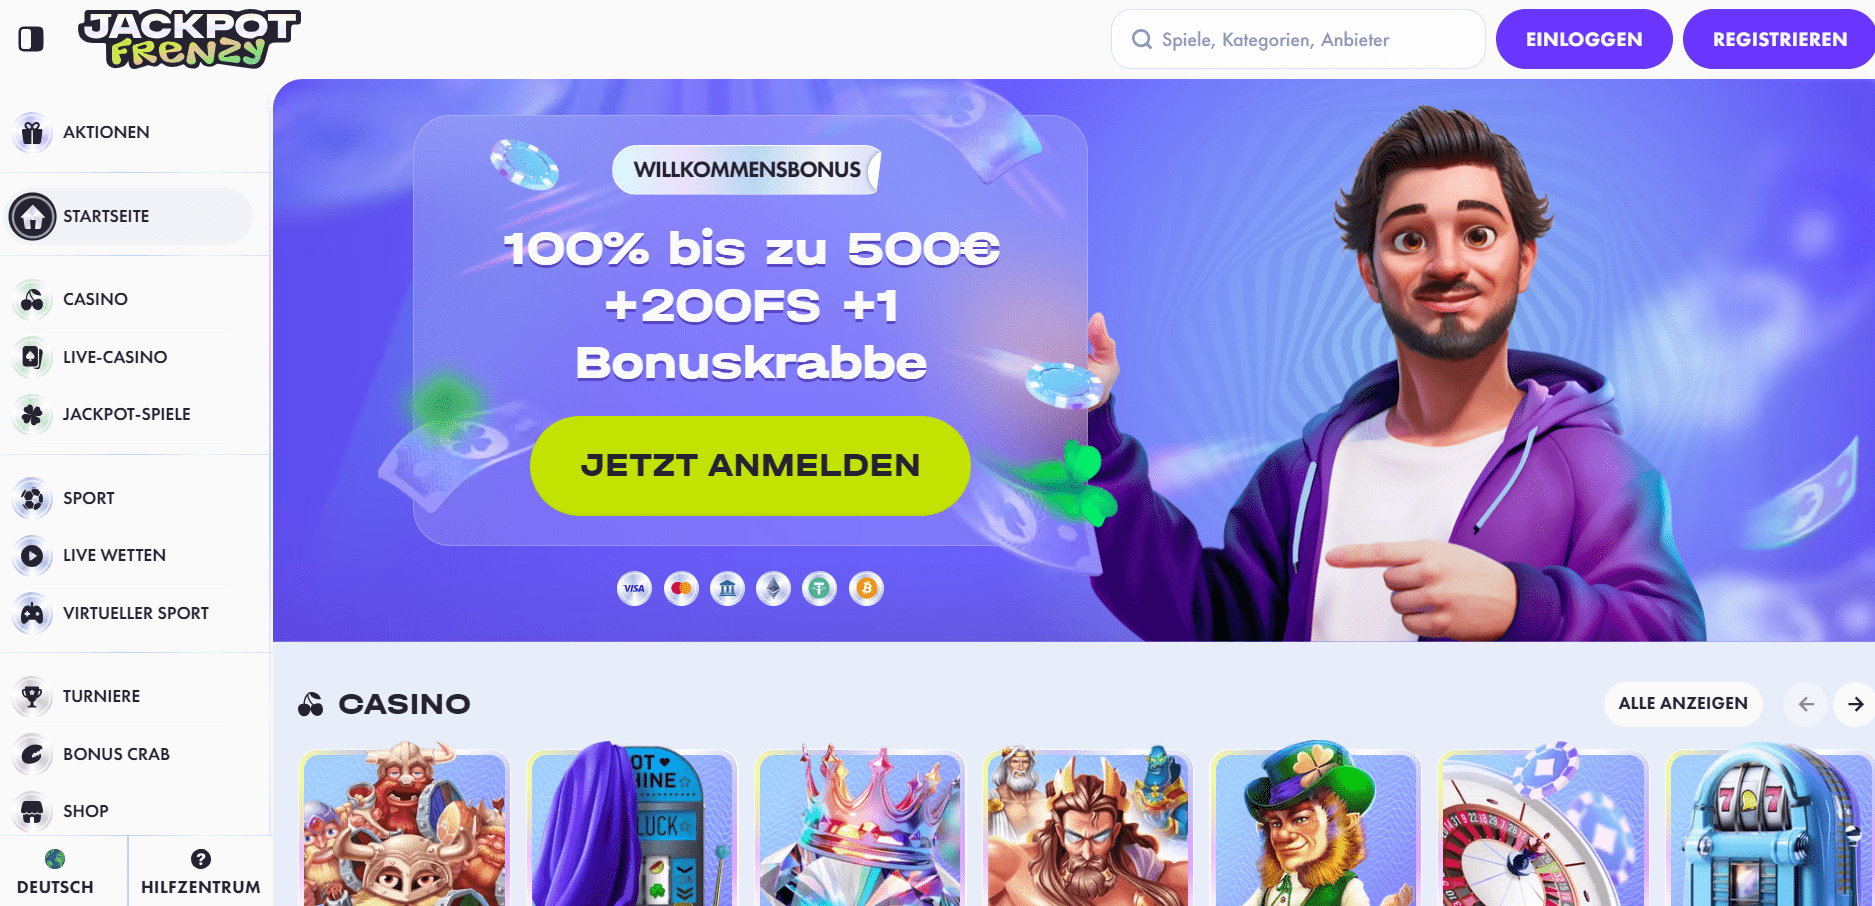 Jackpot Frenzy Homepage